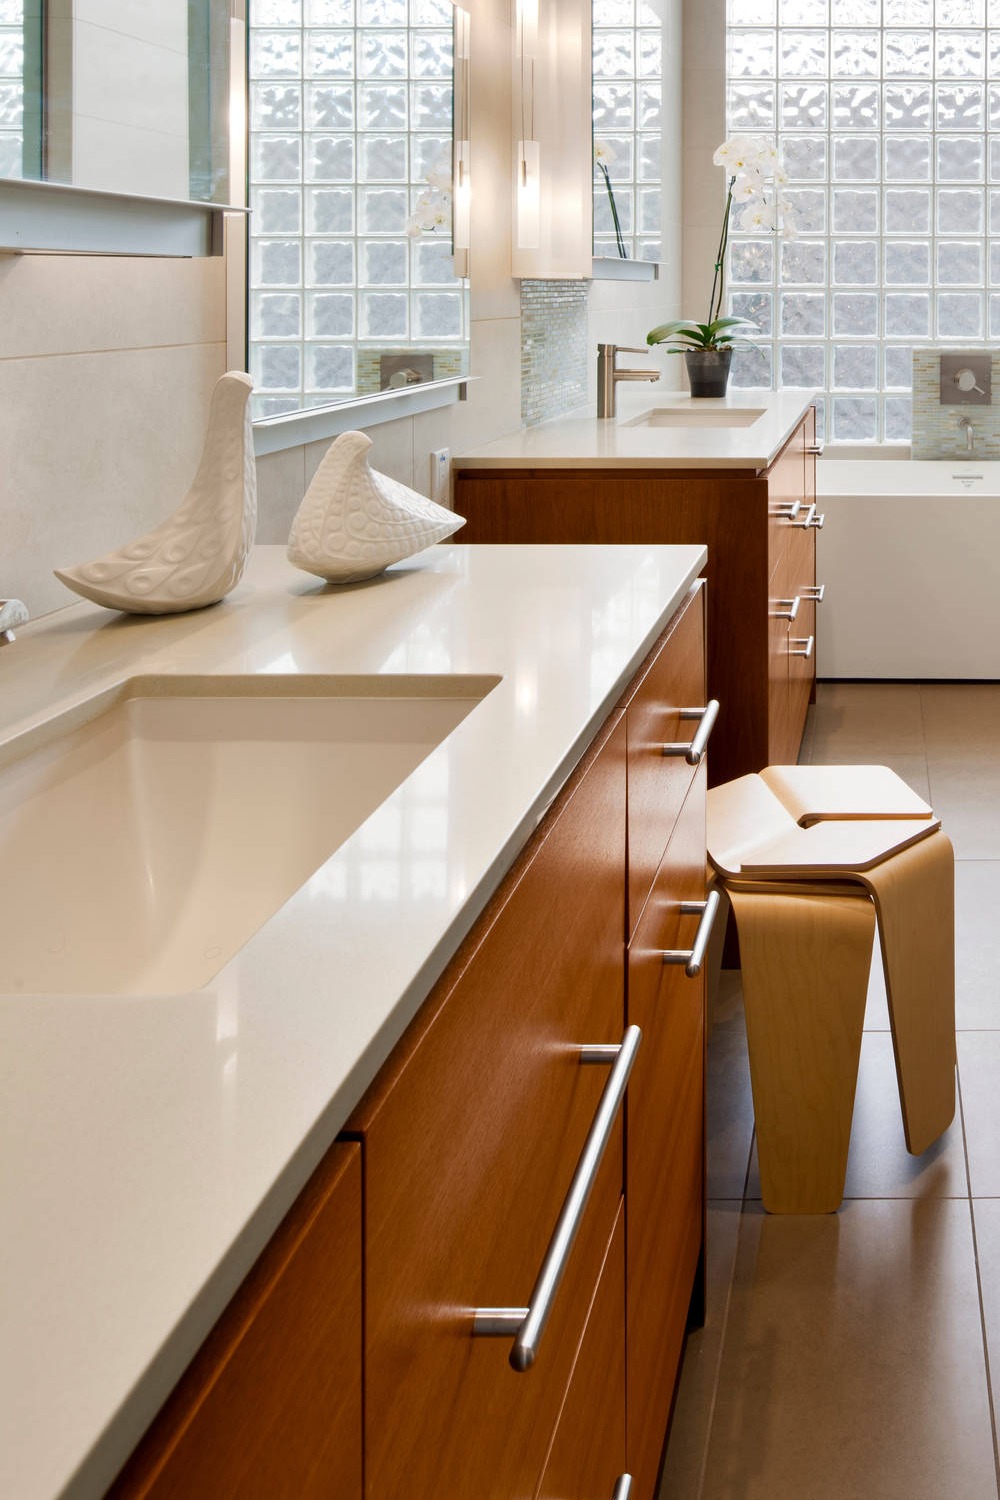 White Quartz Countertops Beige Porcelain Floor Tiles Flat Panel Medium Tone Wood Cabinets Cream Backsplash